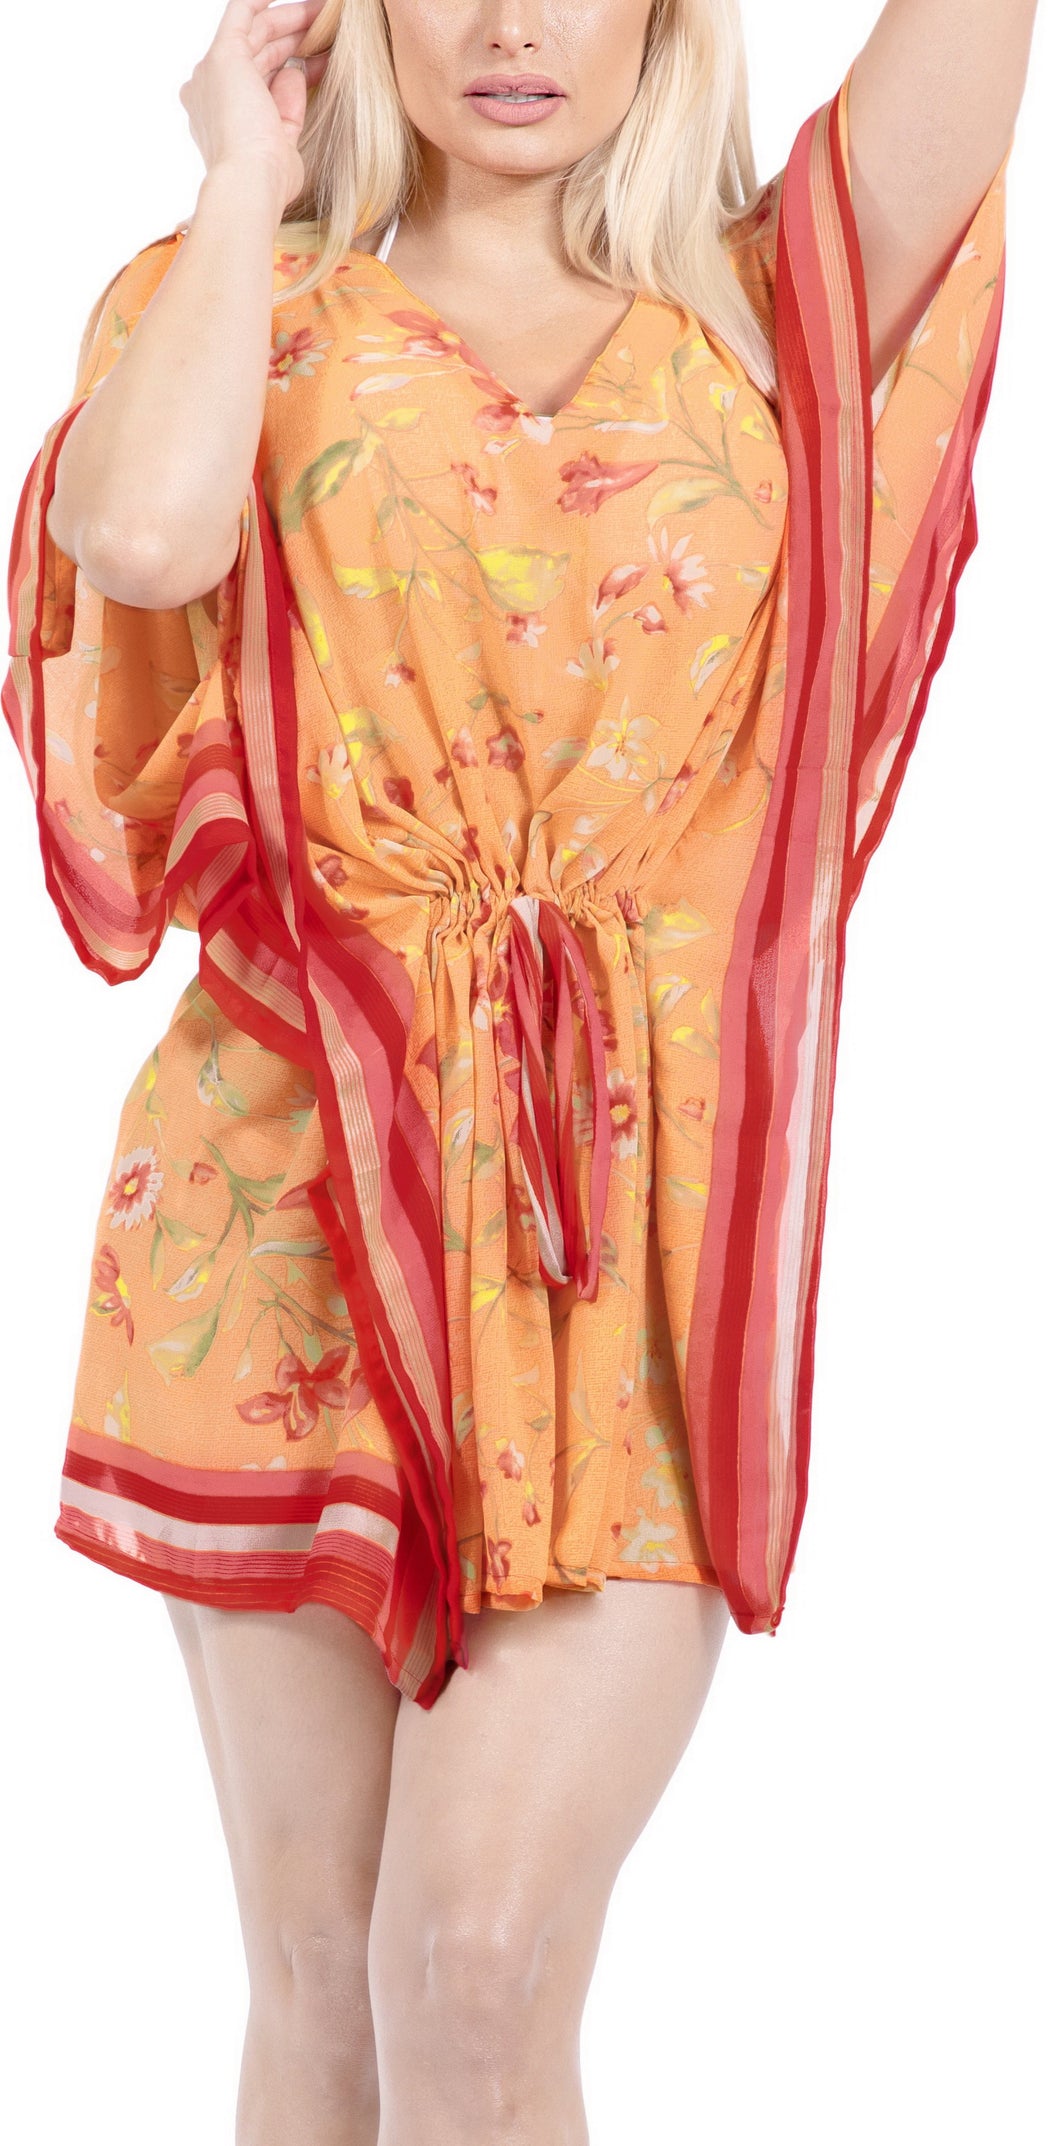 LA LEELA swimwear Cover up Beach Kimono Plus Size Orange_Y310 OSFM 16-28W[XL-4X]